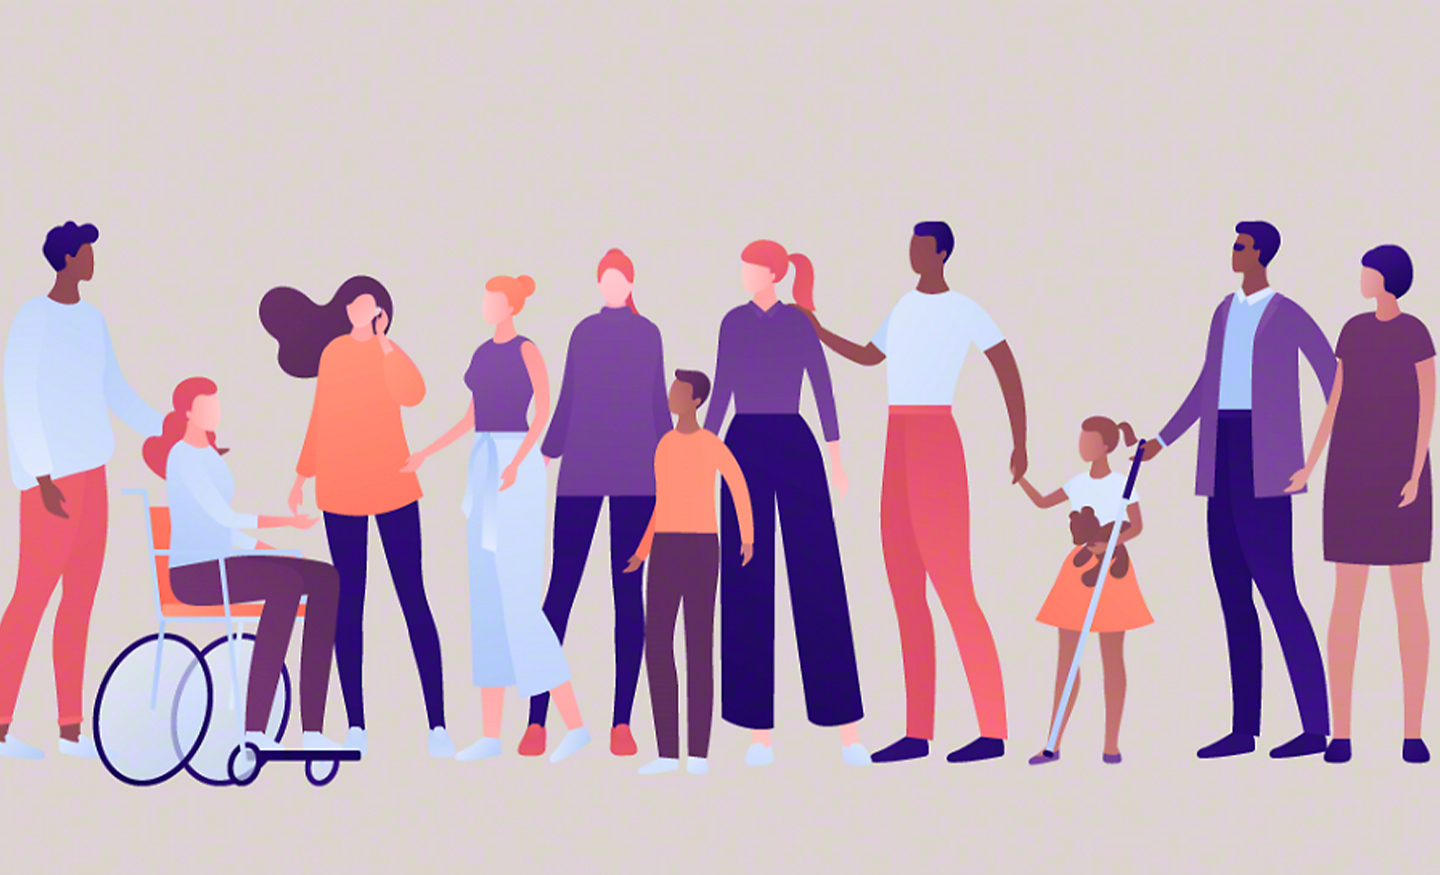 Illustration showing a diverse range of people